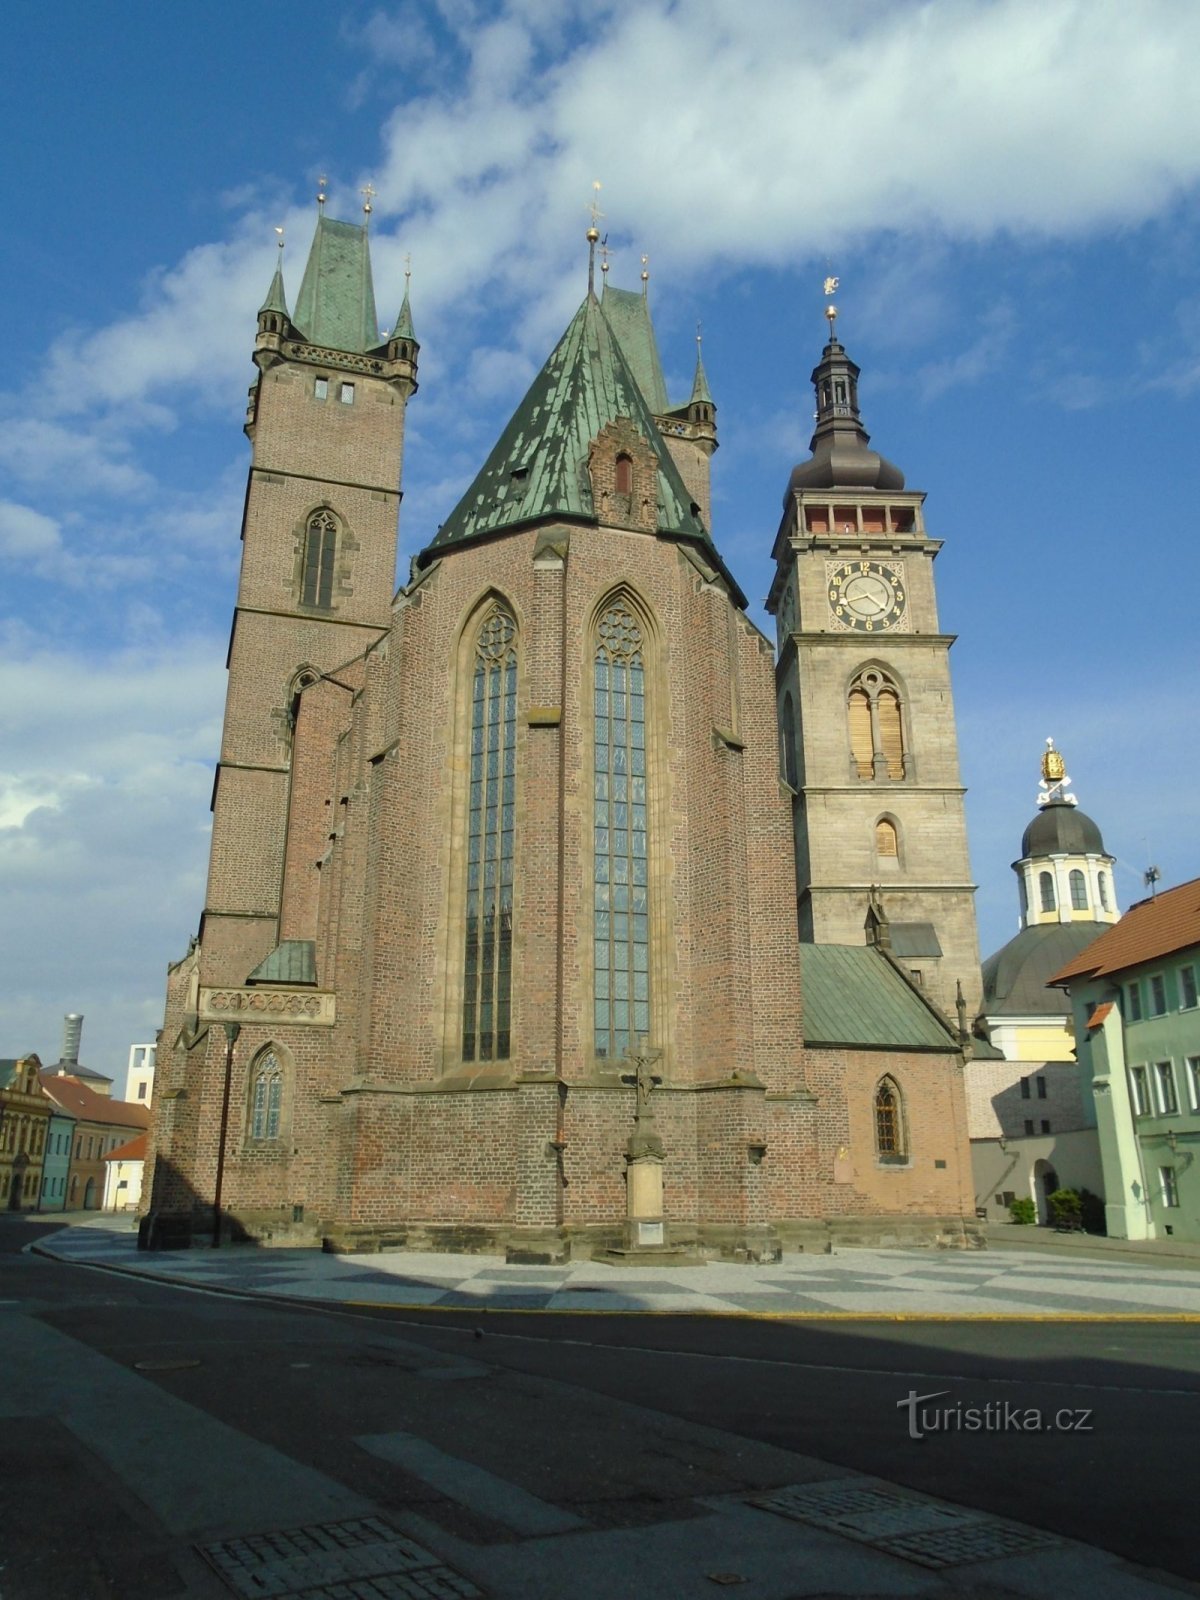 Cathedral of St. Spirit with the White Tower (Hradec Králové, 1.5.2019/XNUMX/XNUMX)